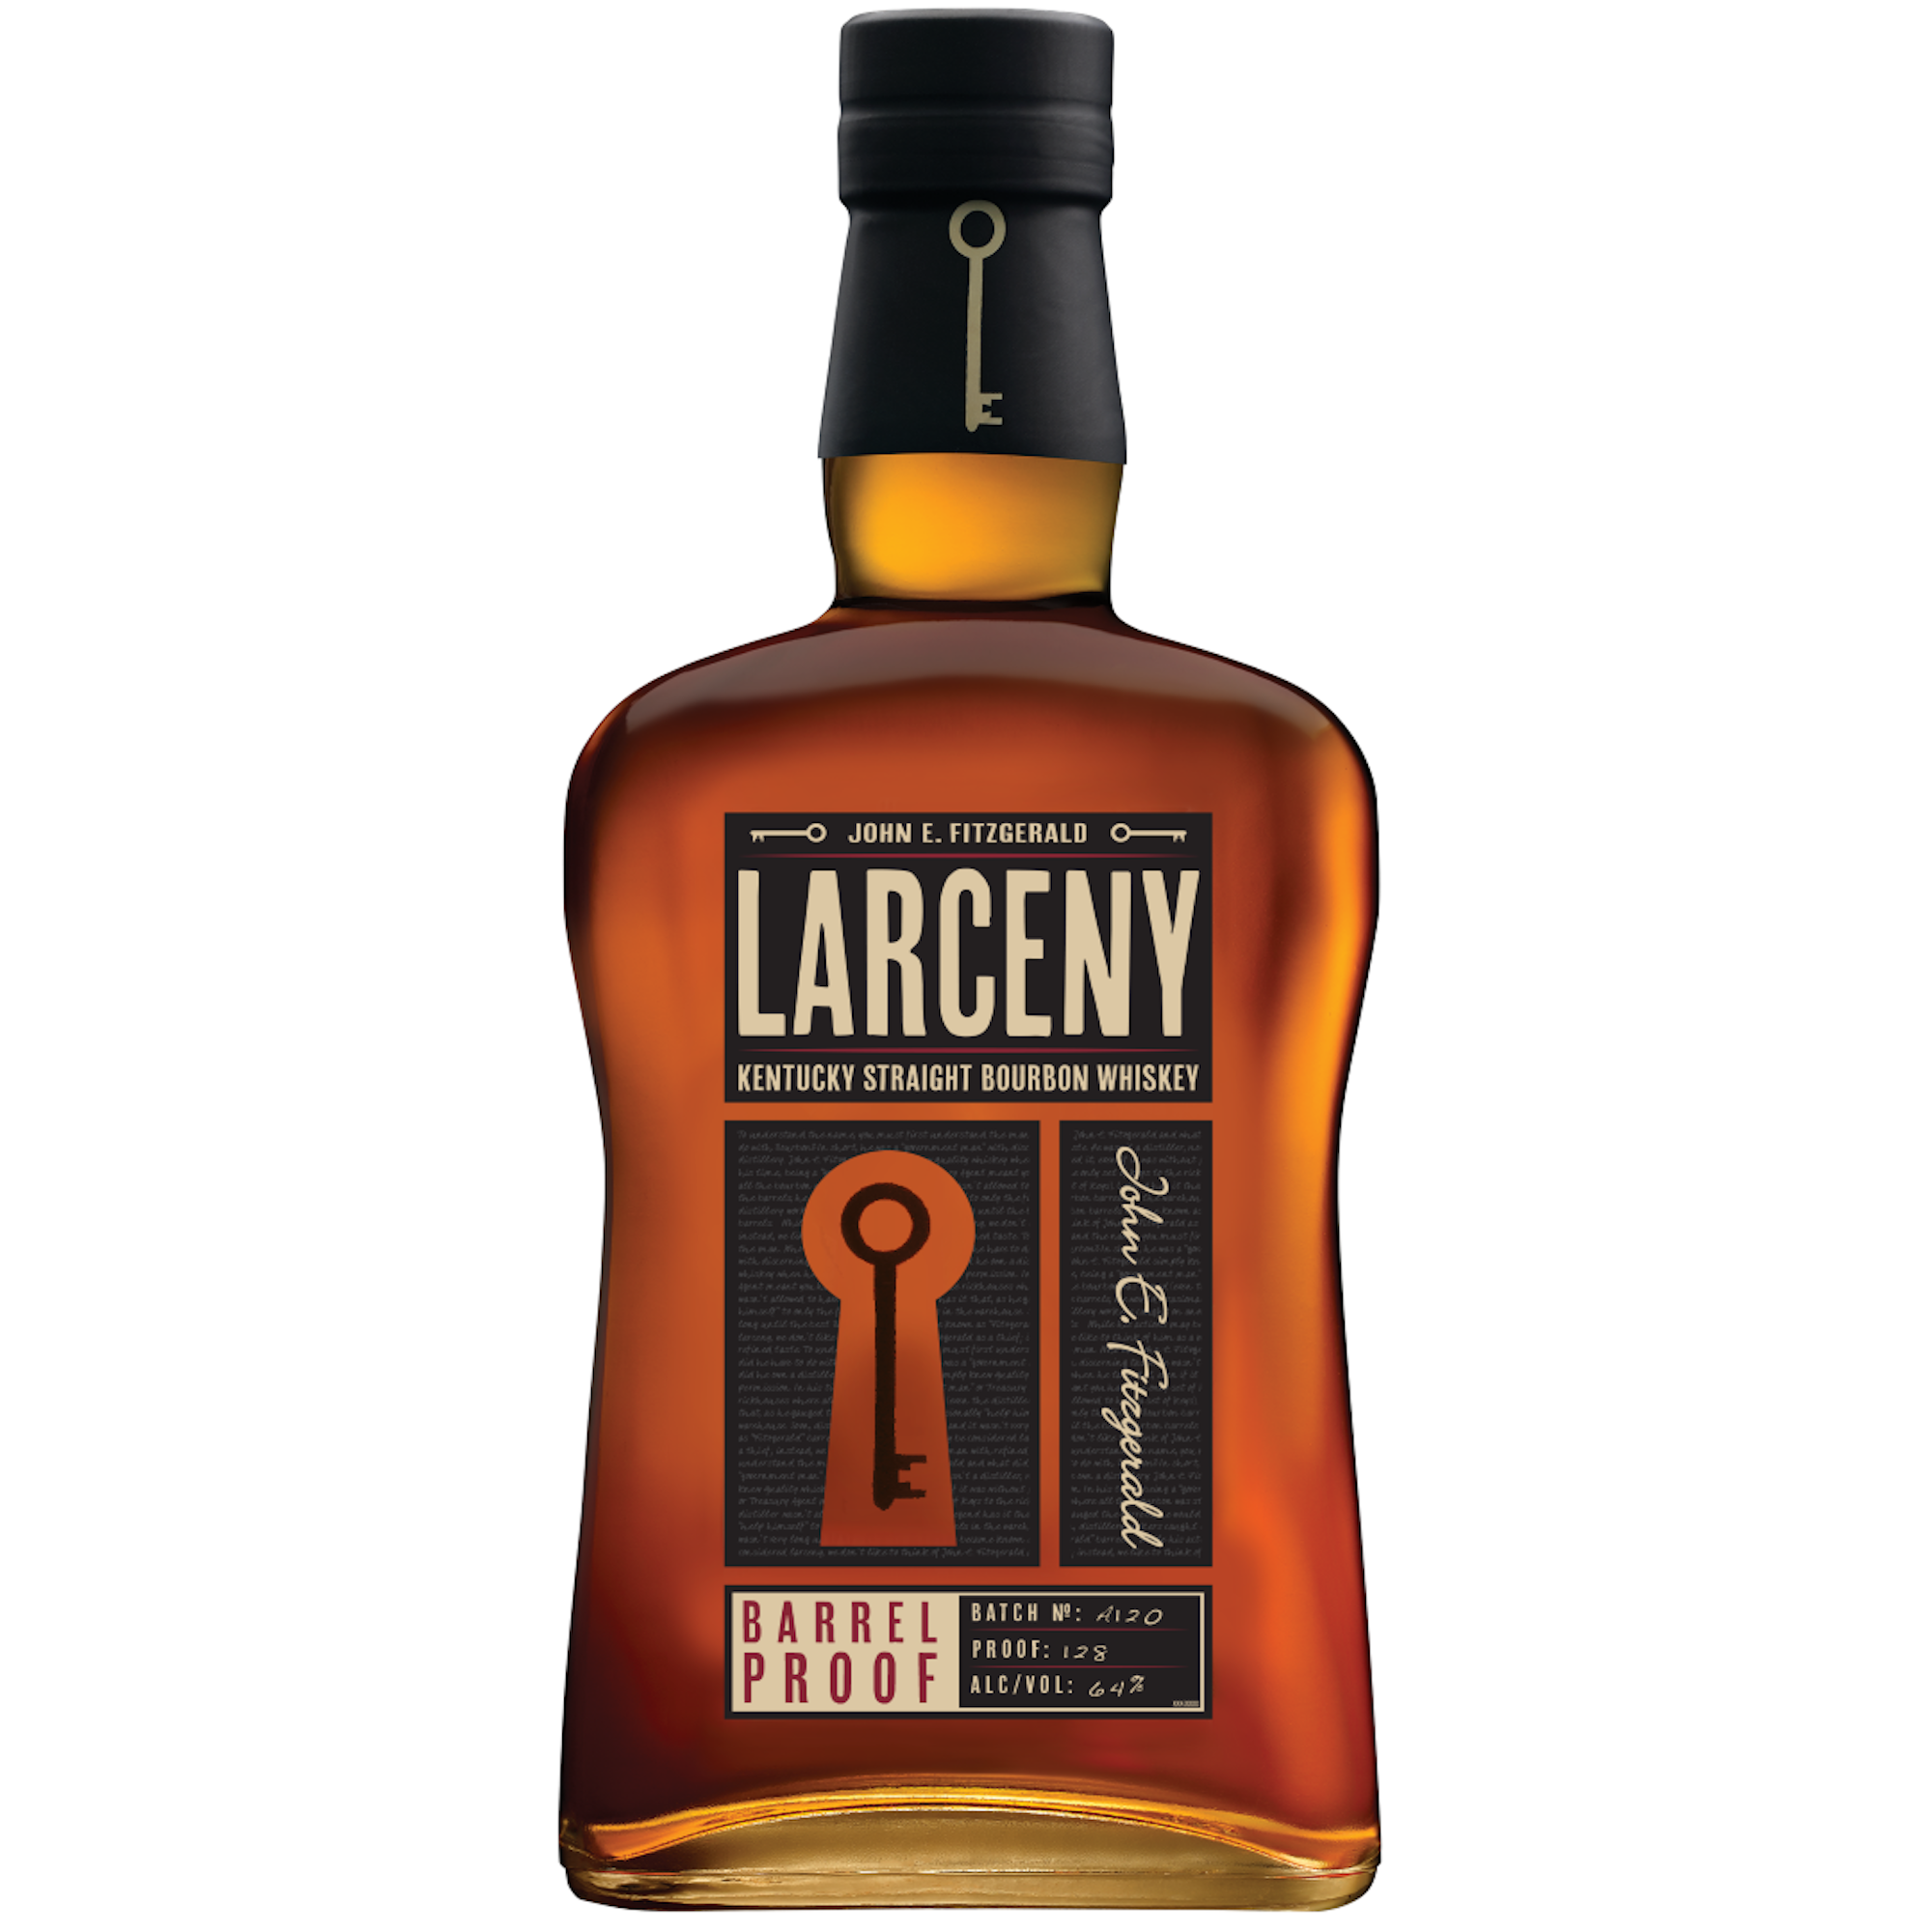 Larceny Very Barrel Proof Kentucky Straight Bourbon (Batch No A123)